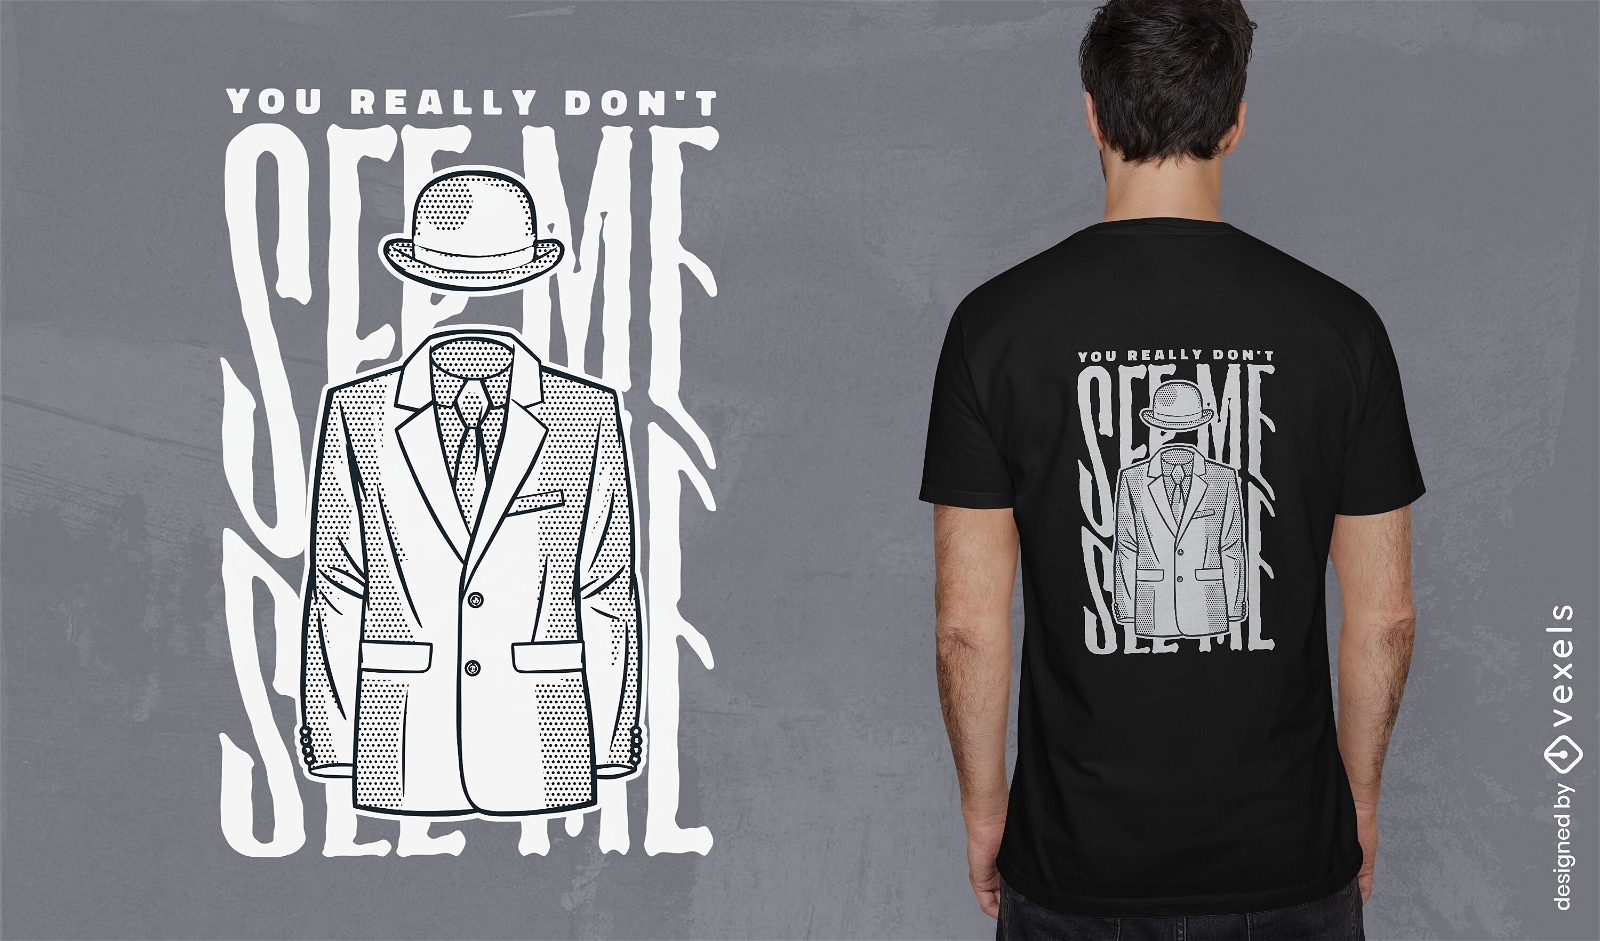 Invisible man t-shirt design